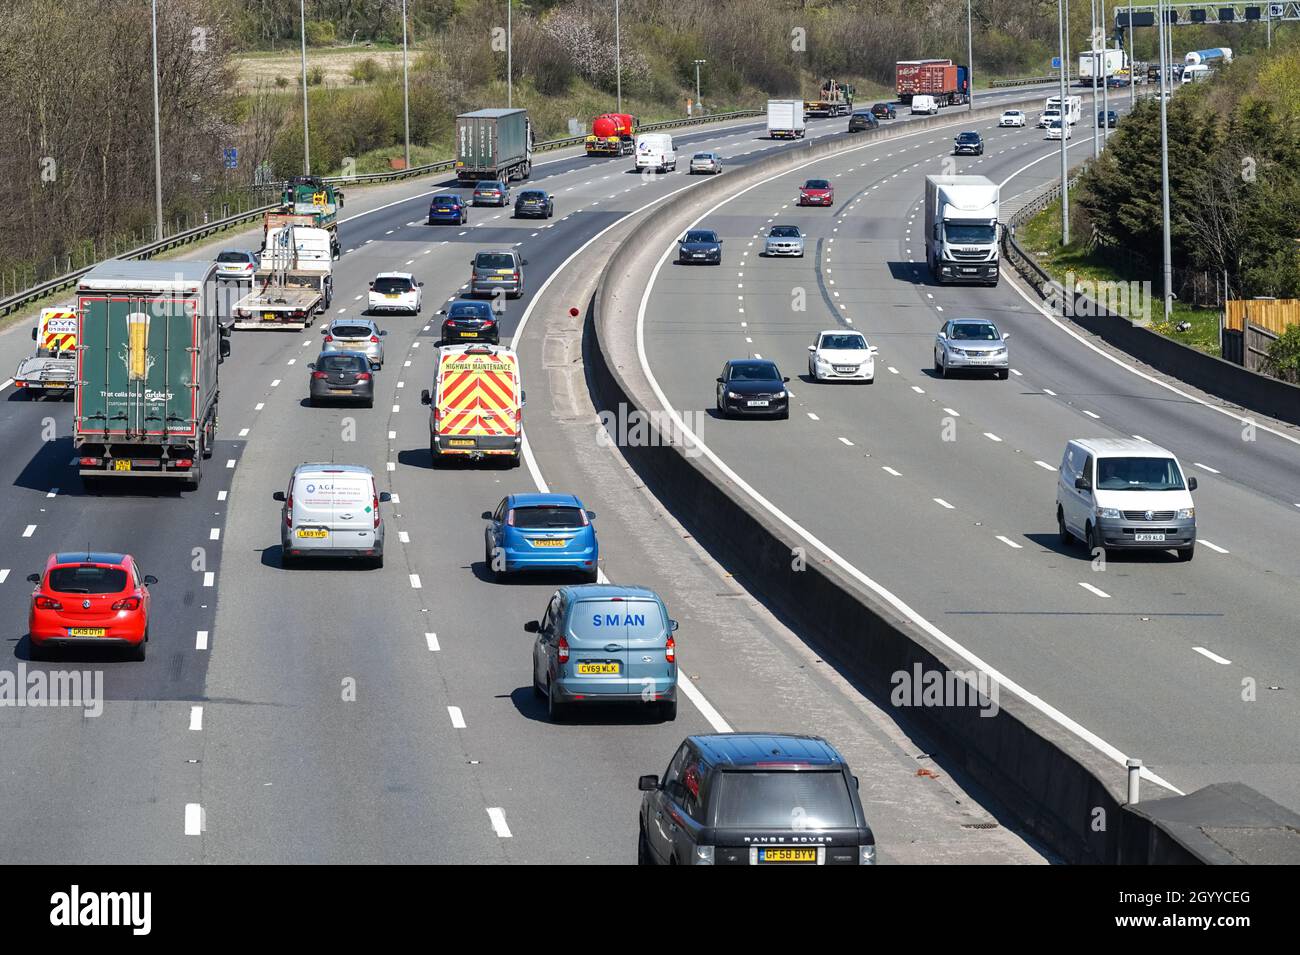 M25 o London Orbital Motorway a Londra Inghilterra Regno Unito Foto Stock